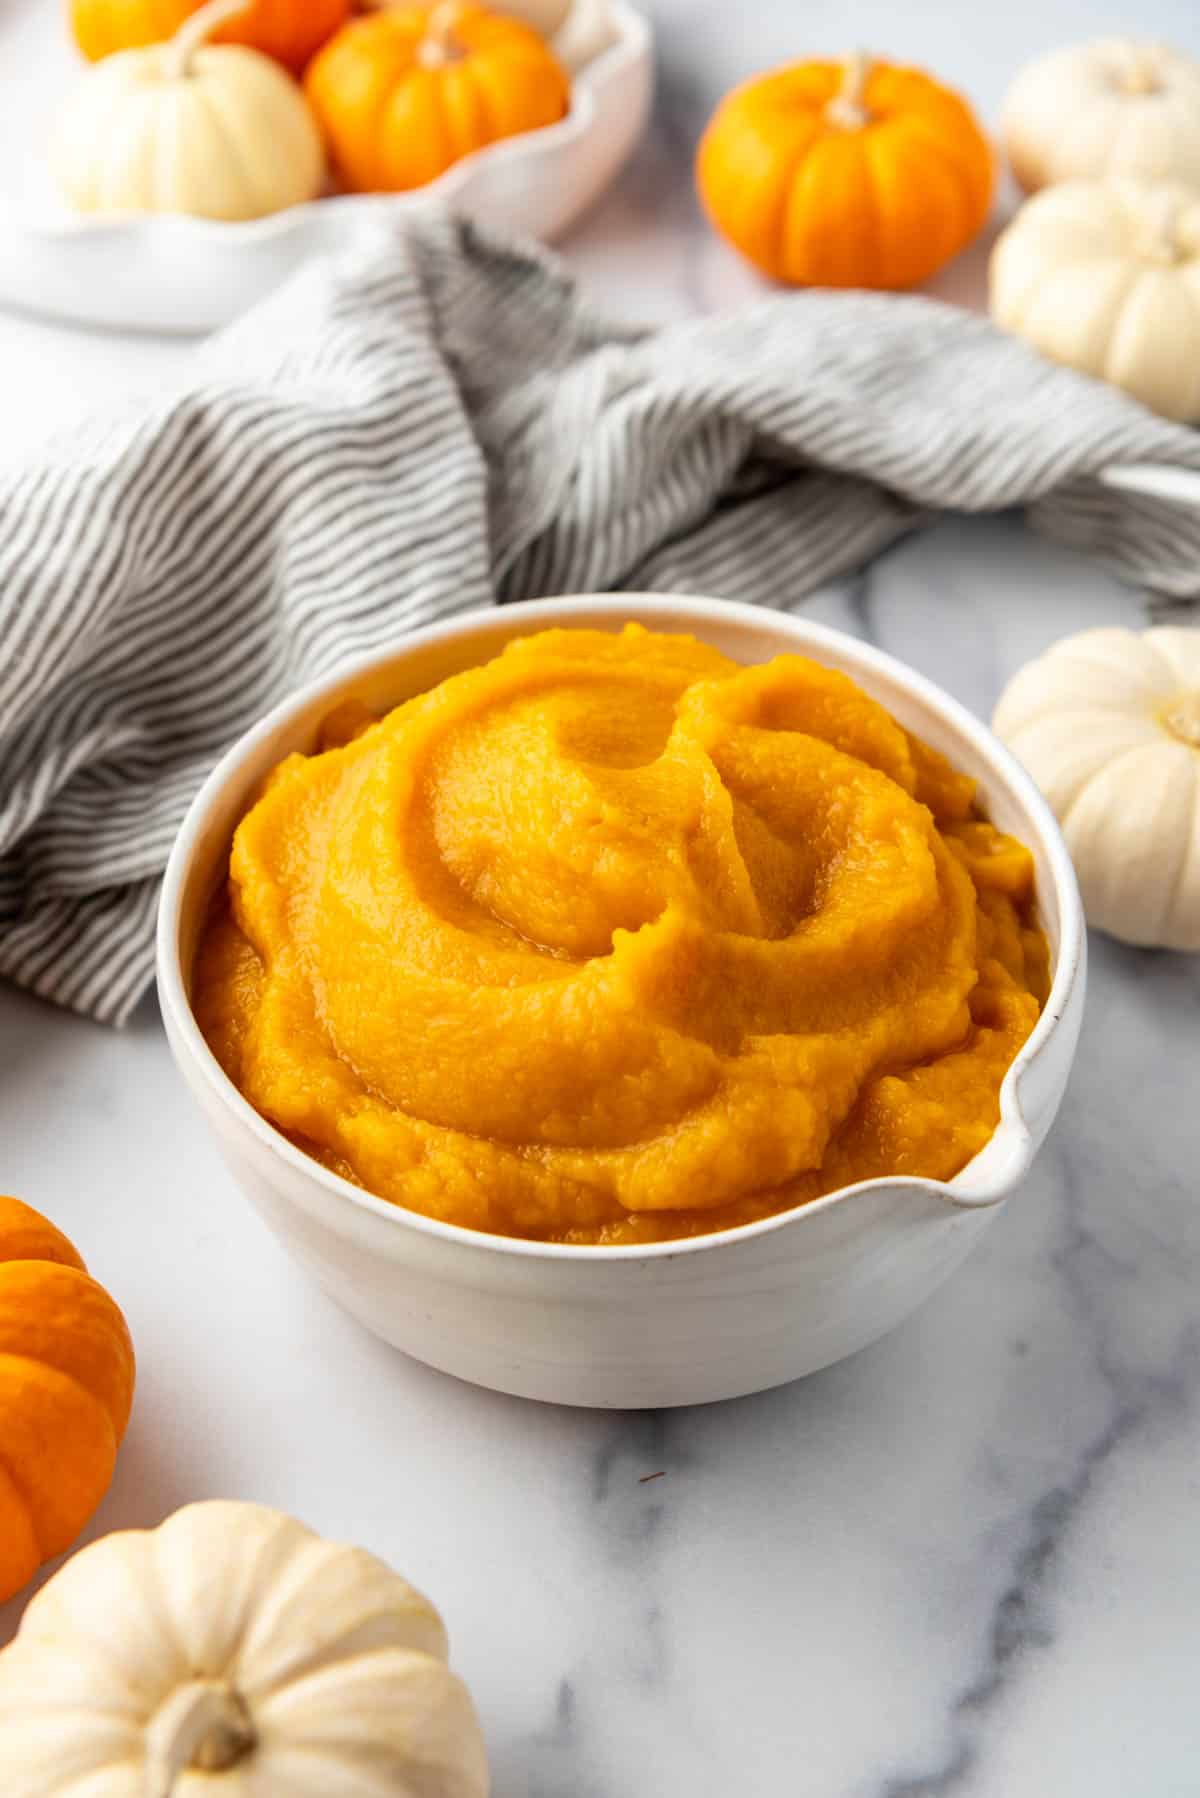 An image of a bowl of homemade pumpkin puree.